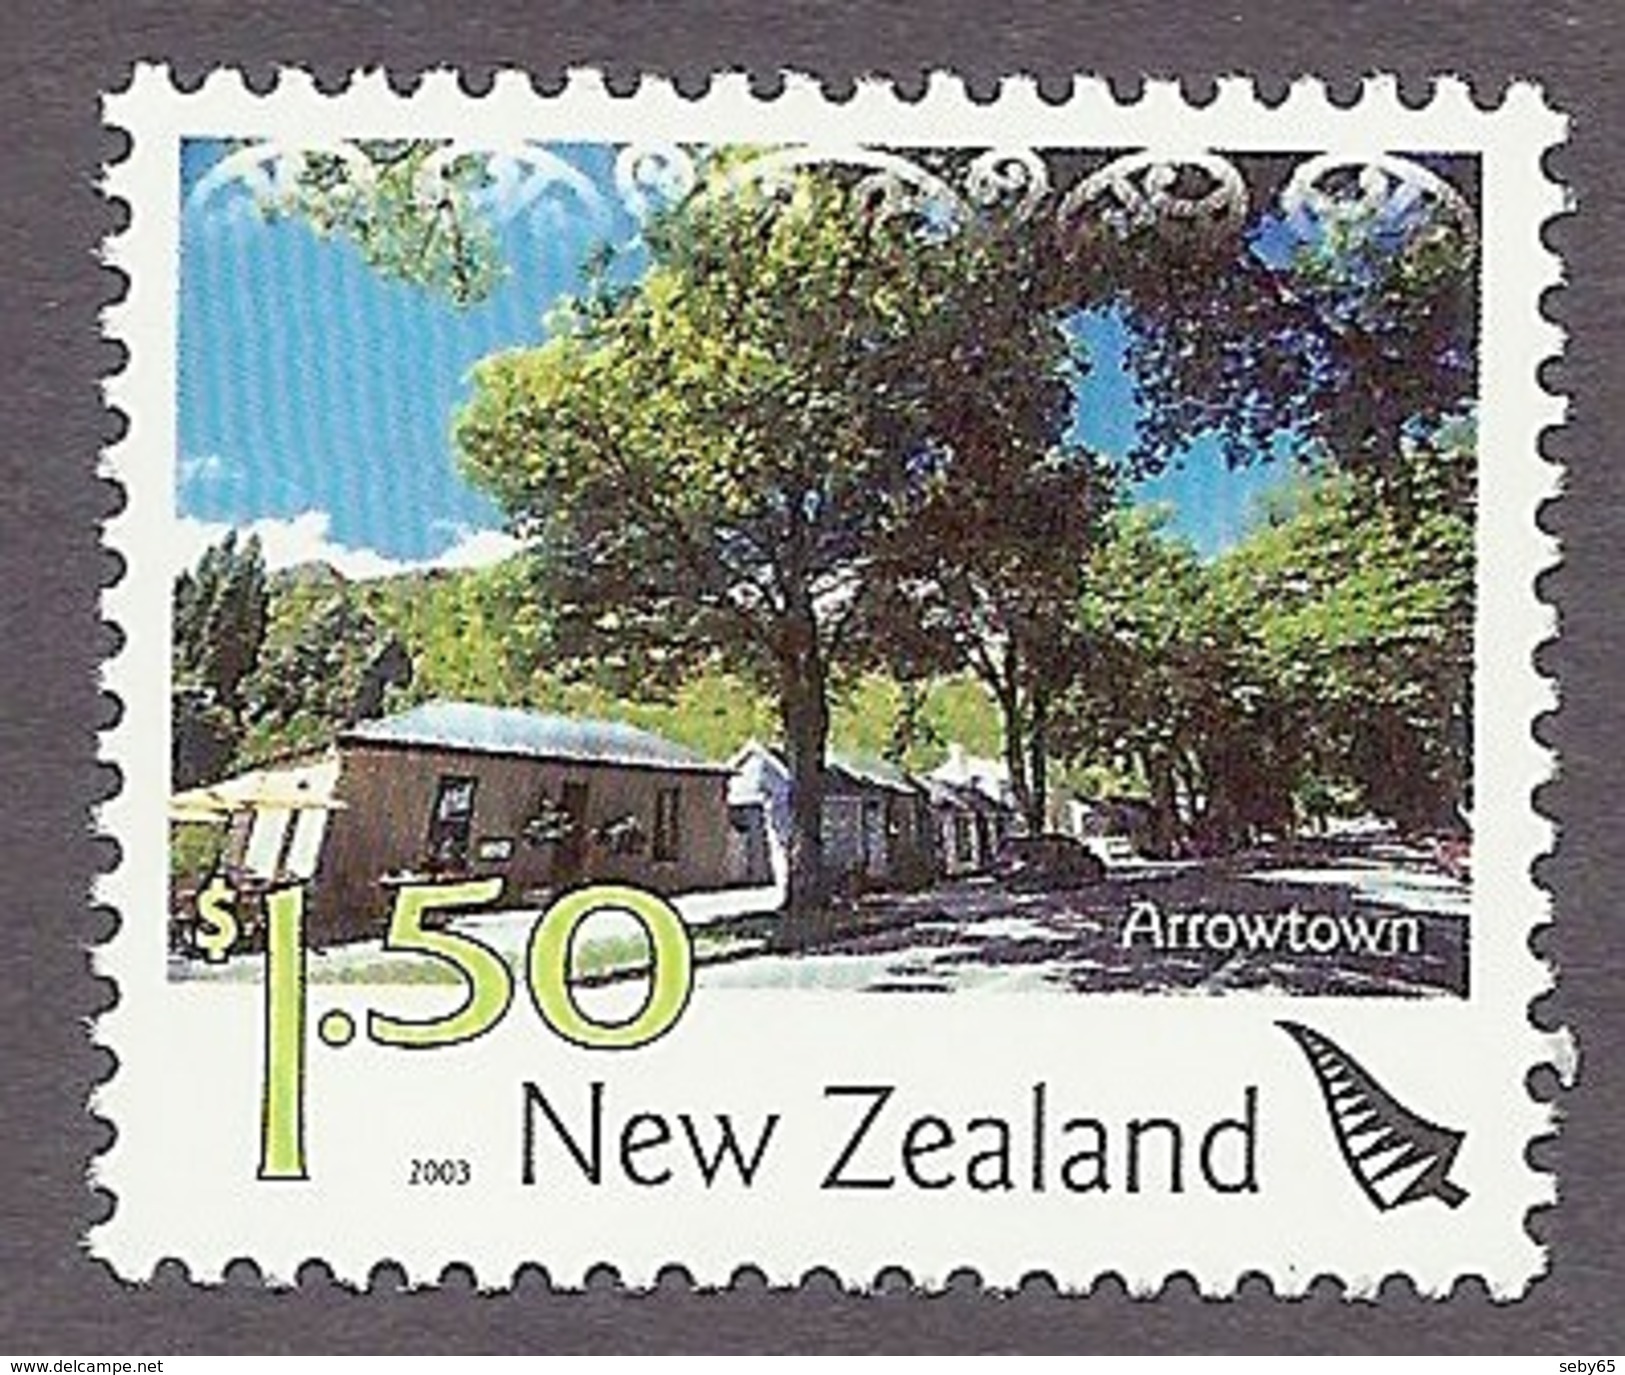 New Zealand 2003 Scenery, Scenic - Arrowtown MNH - Nuovi